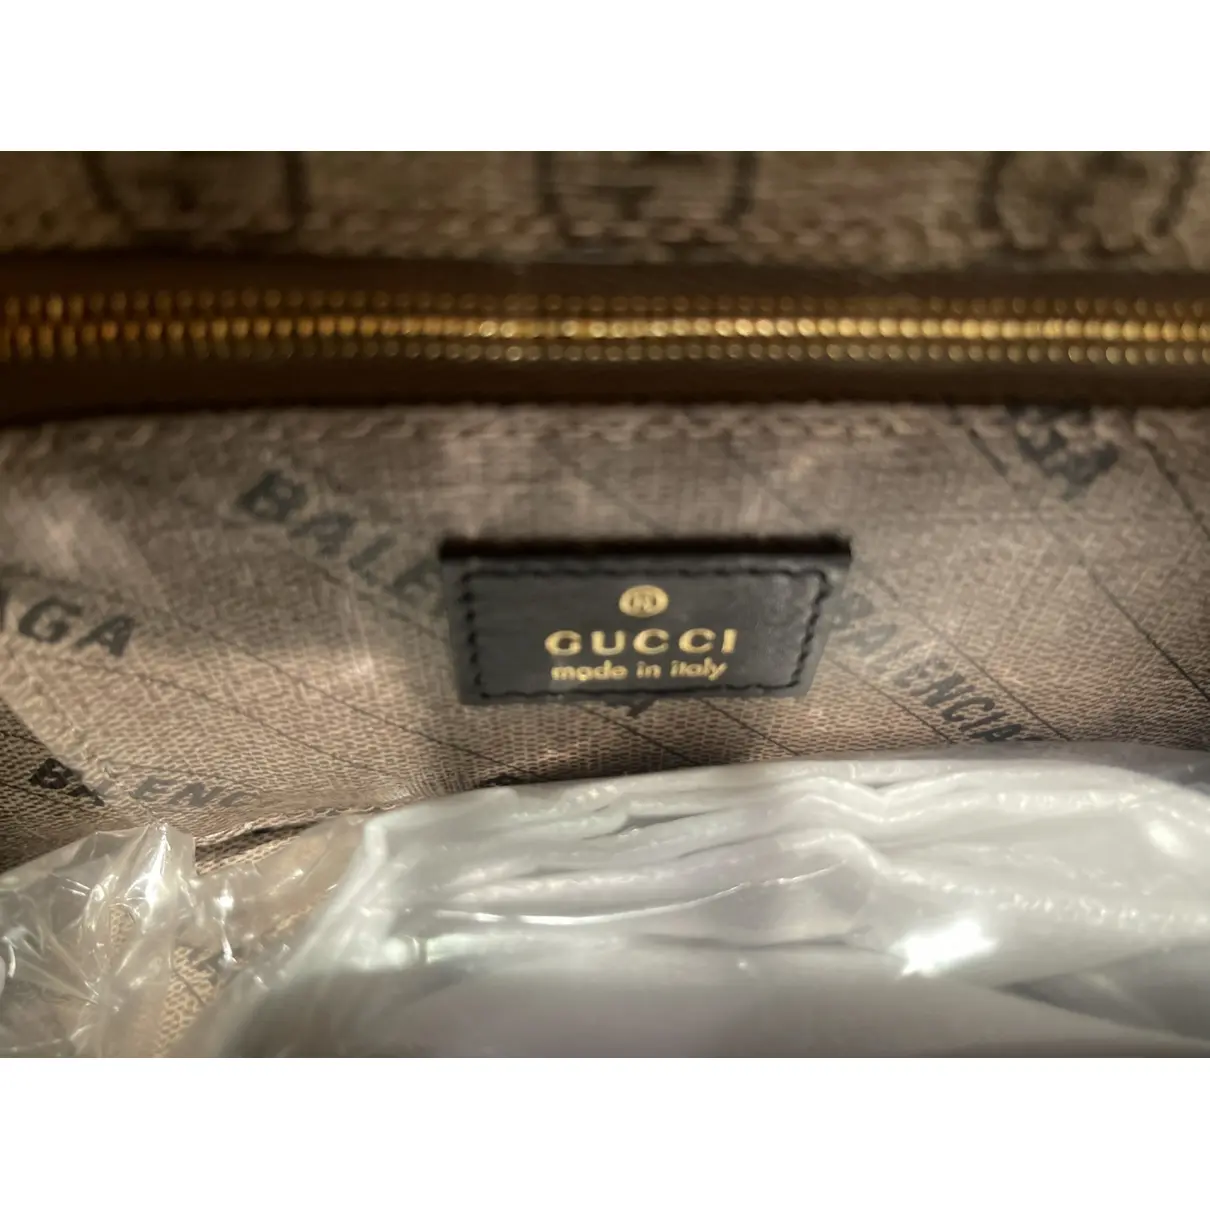 Buy Gucci X Balenciaga Hourglass handbag online